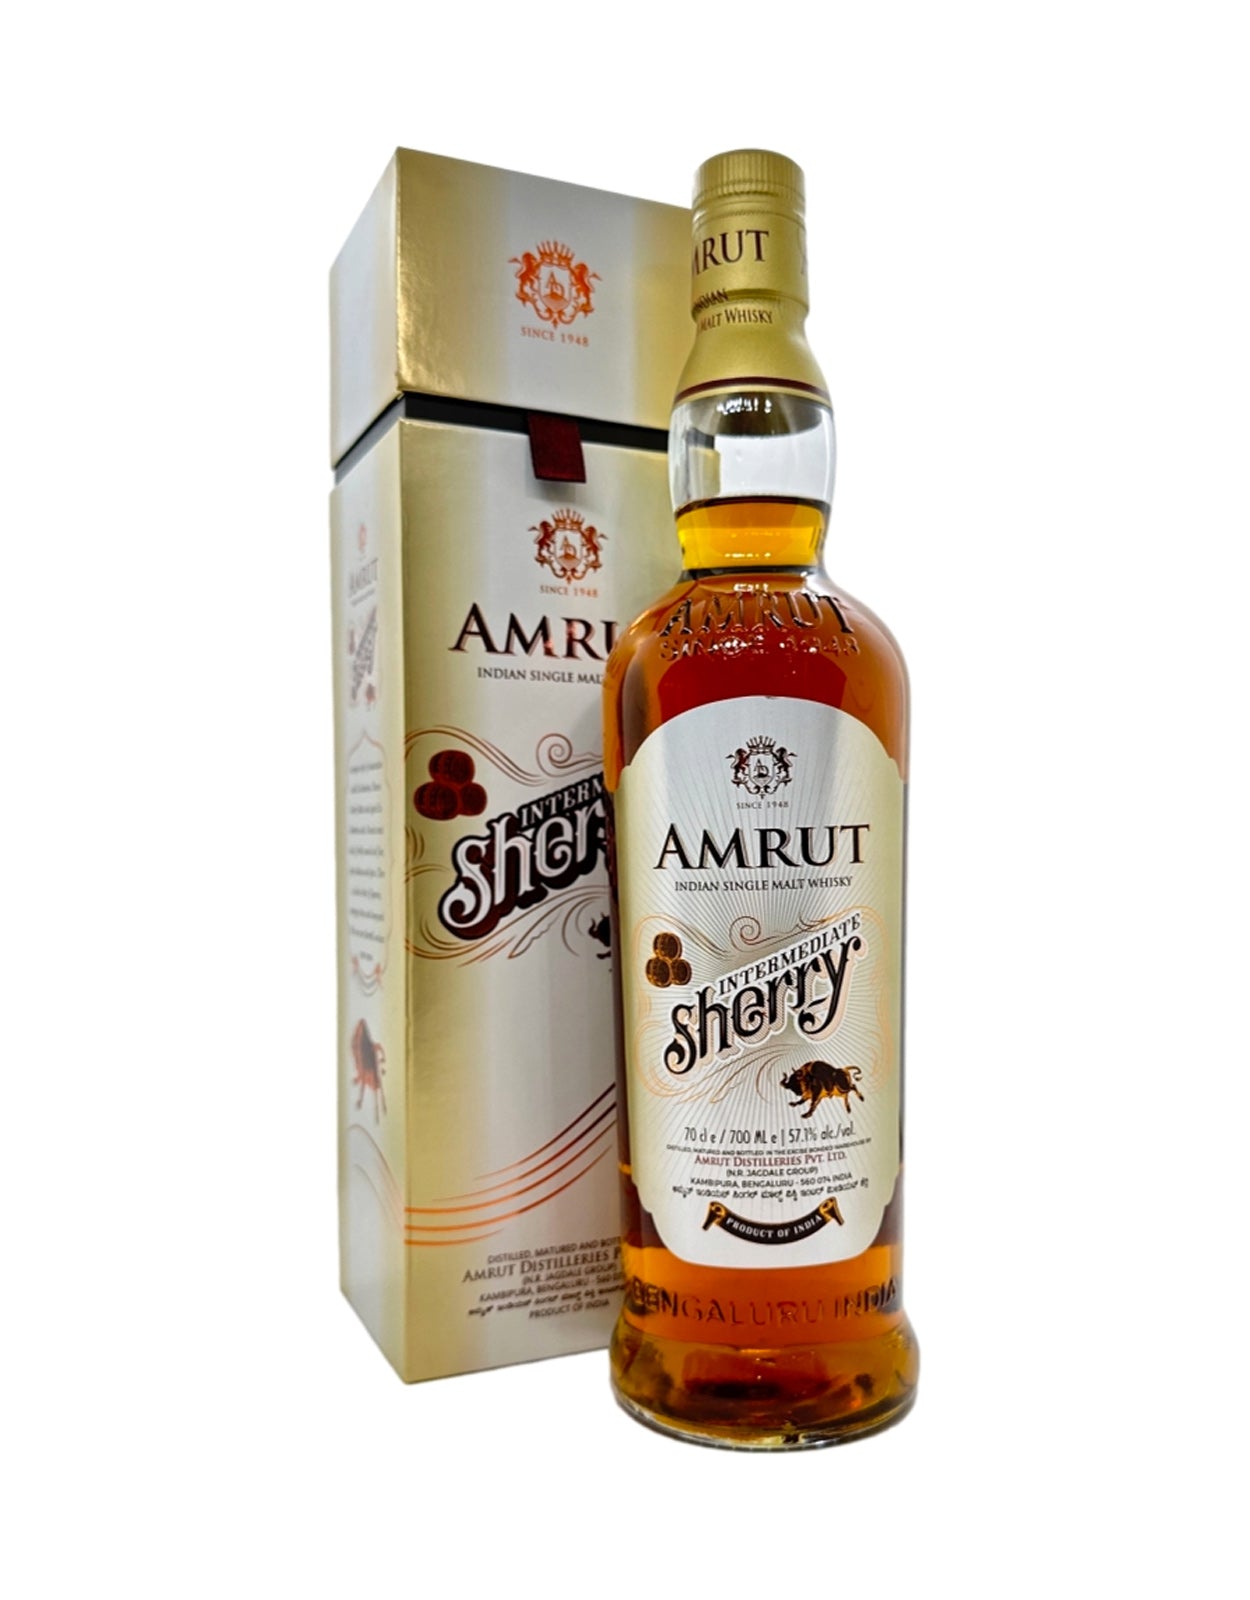 Amrut Intermediate Sherry Single Malt Whisky Cask Strength